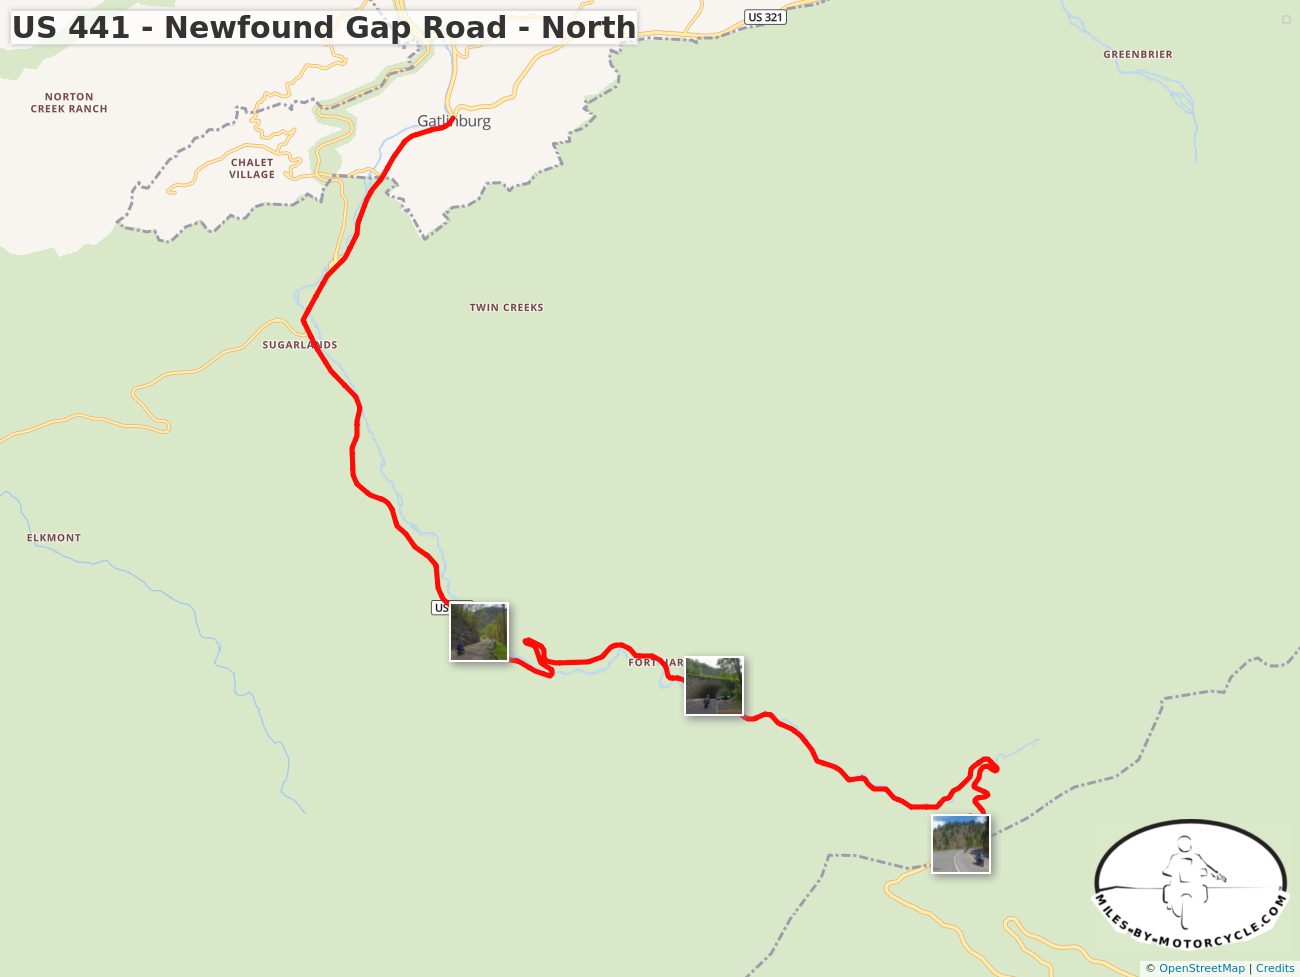 US 441 - Newfound Gap Road - North